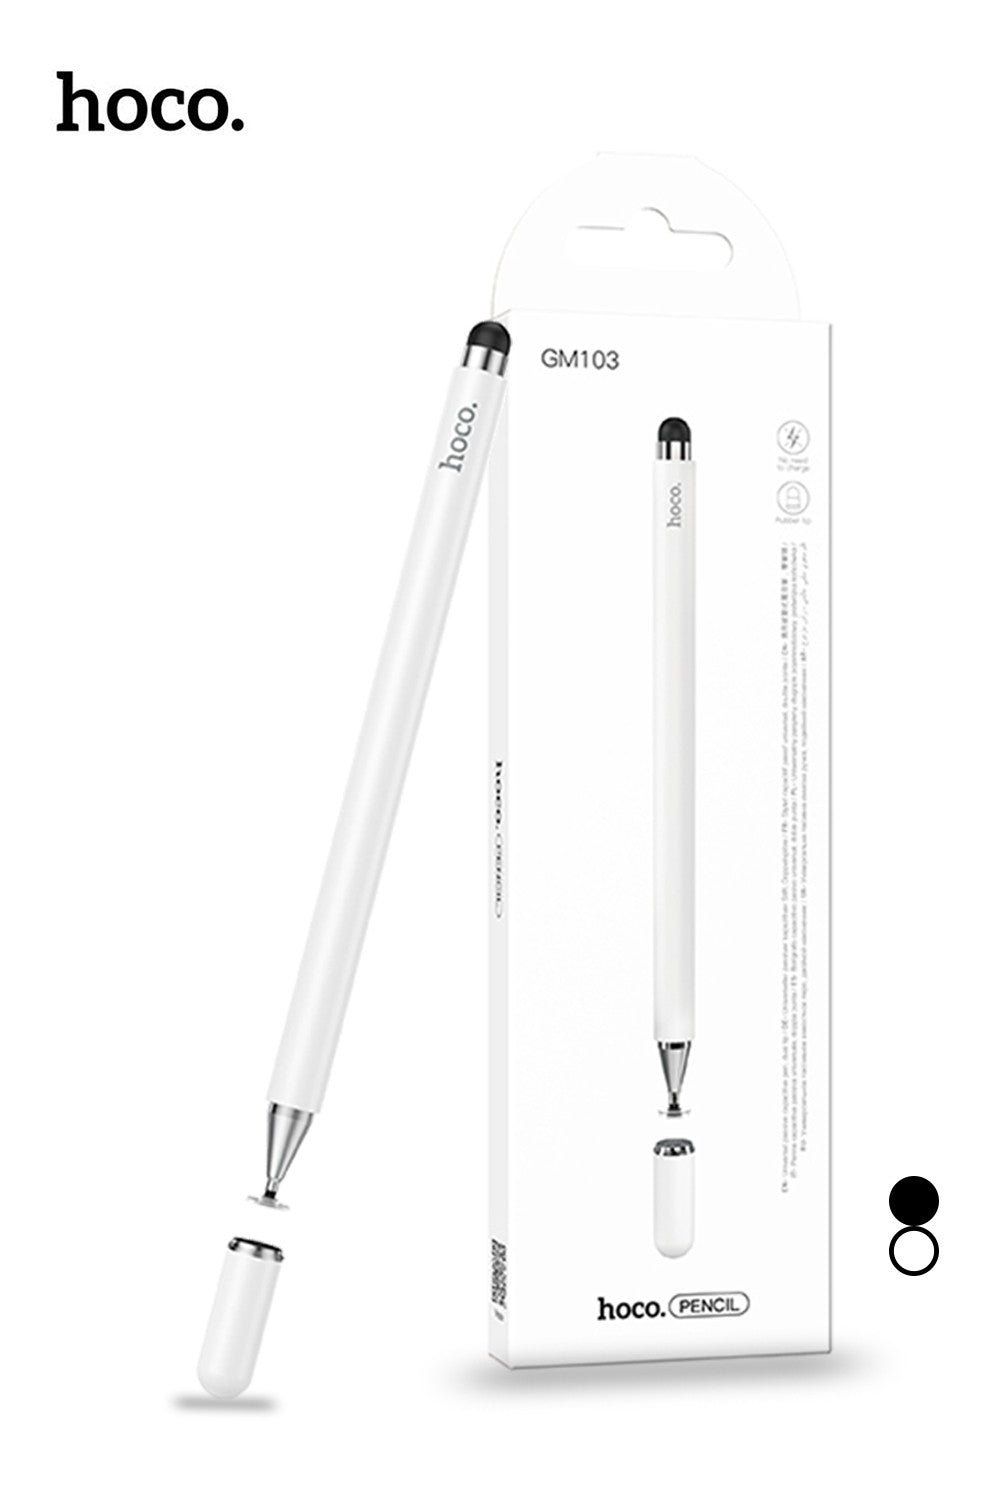 Hoco GM103 Universal Pen Stylus